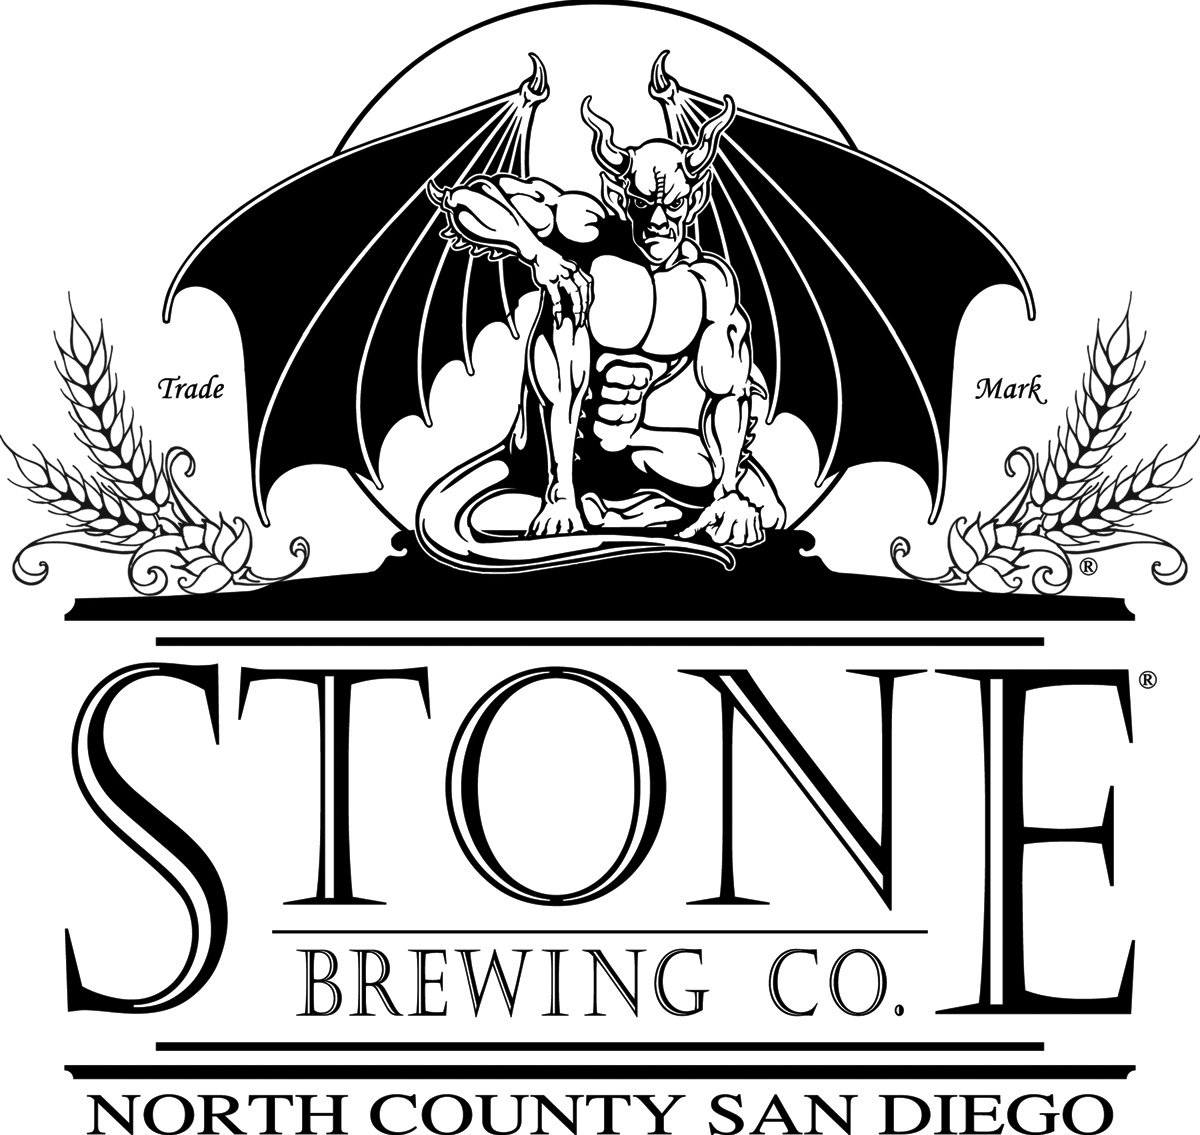 Stone Brewing Co. Logo